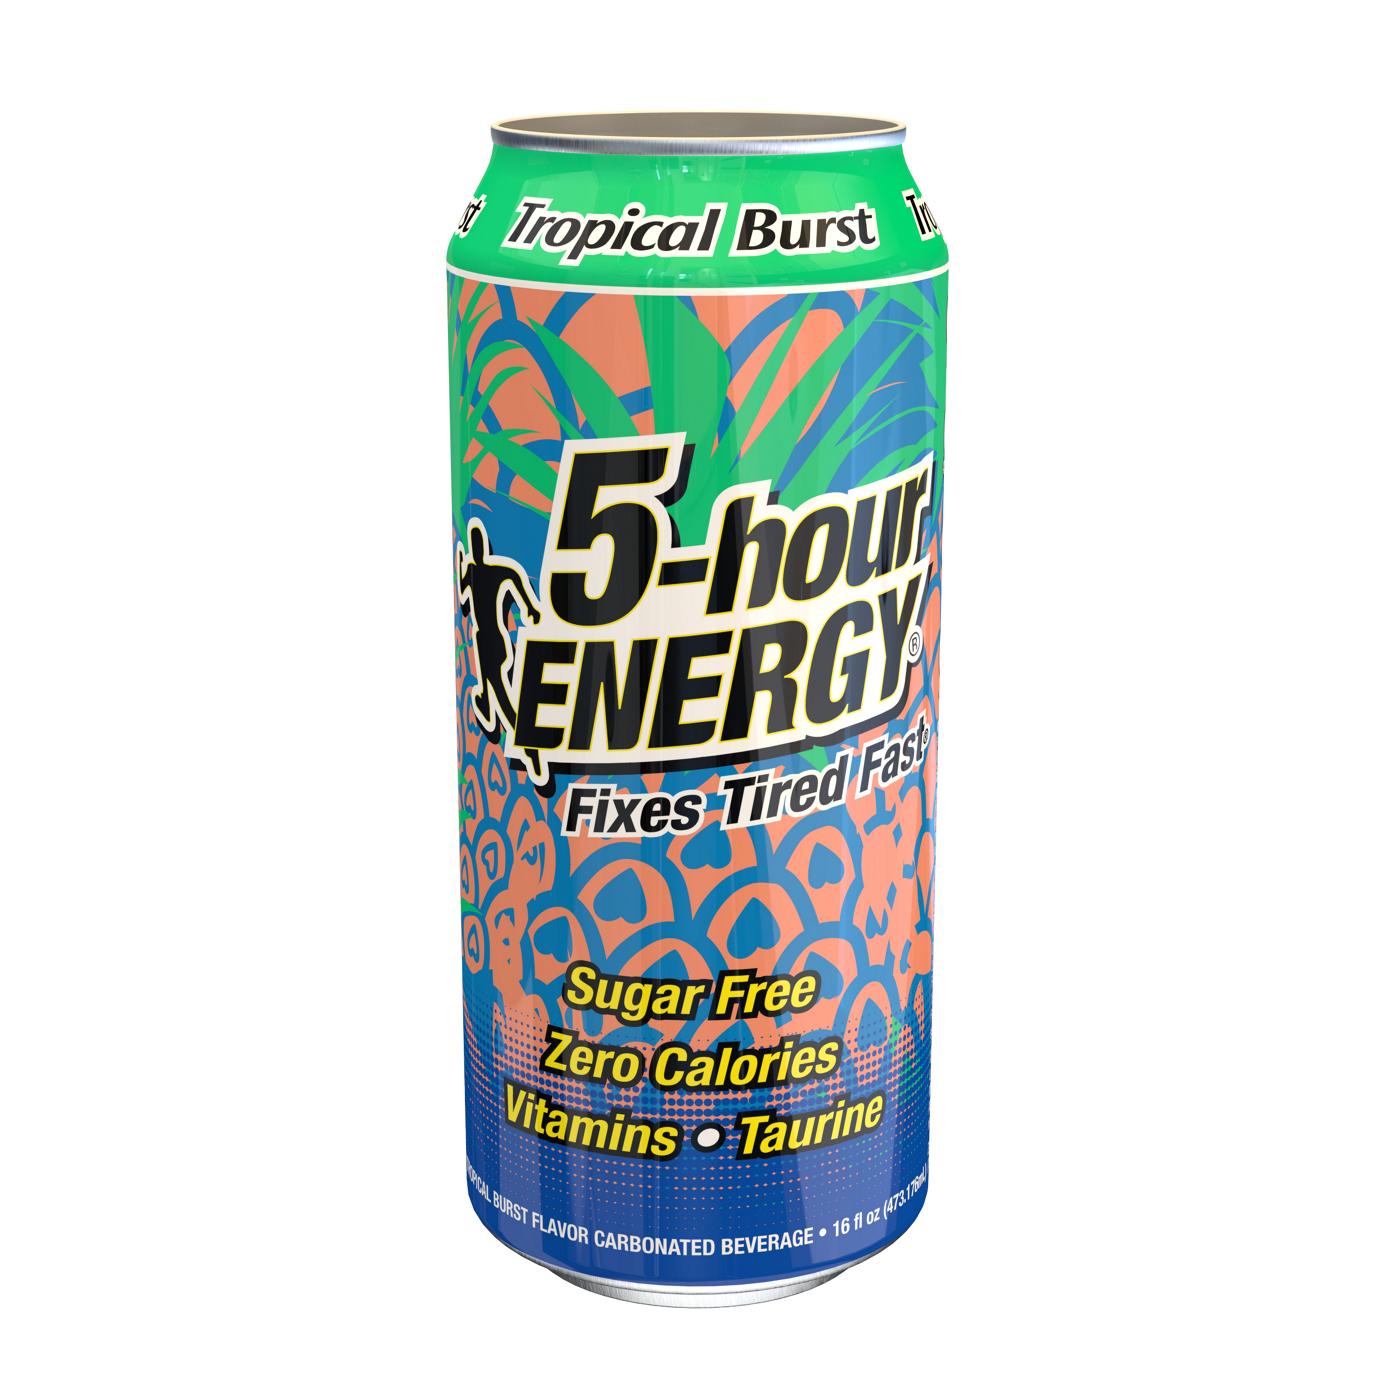 5-hour ENERGY Extra Strength Energy Drink - Tropical Burst; image 1 of 2